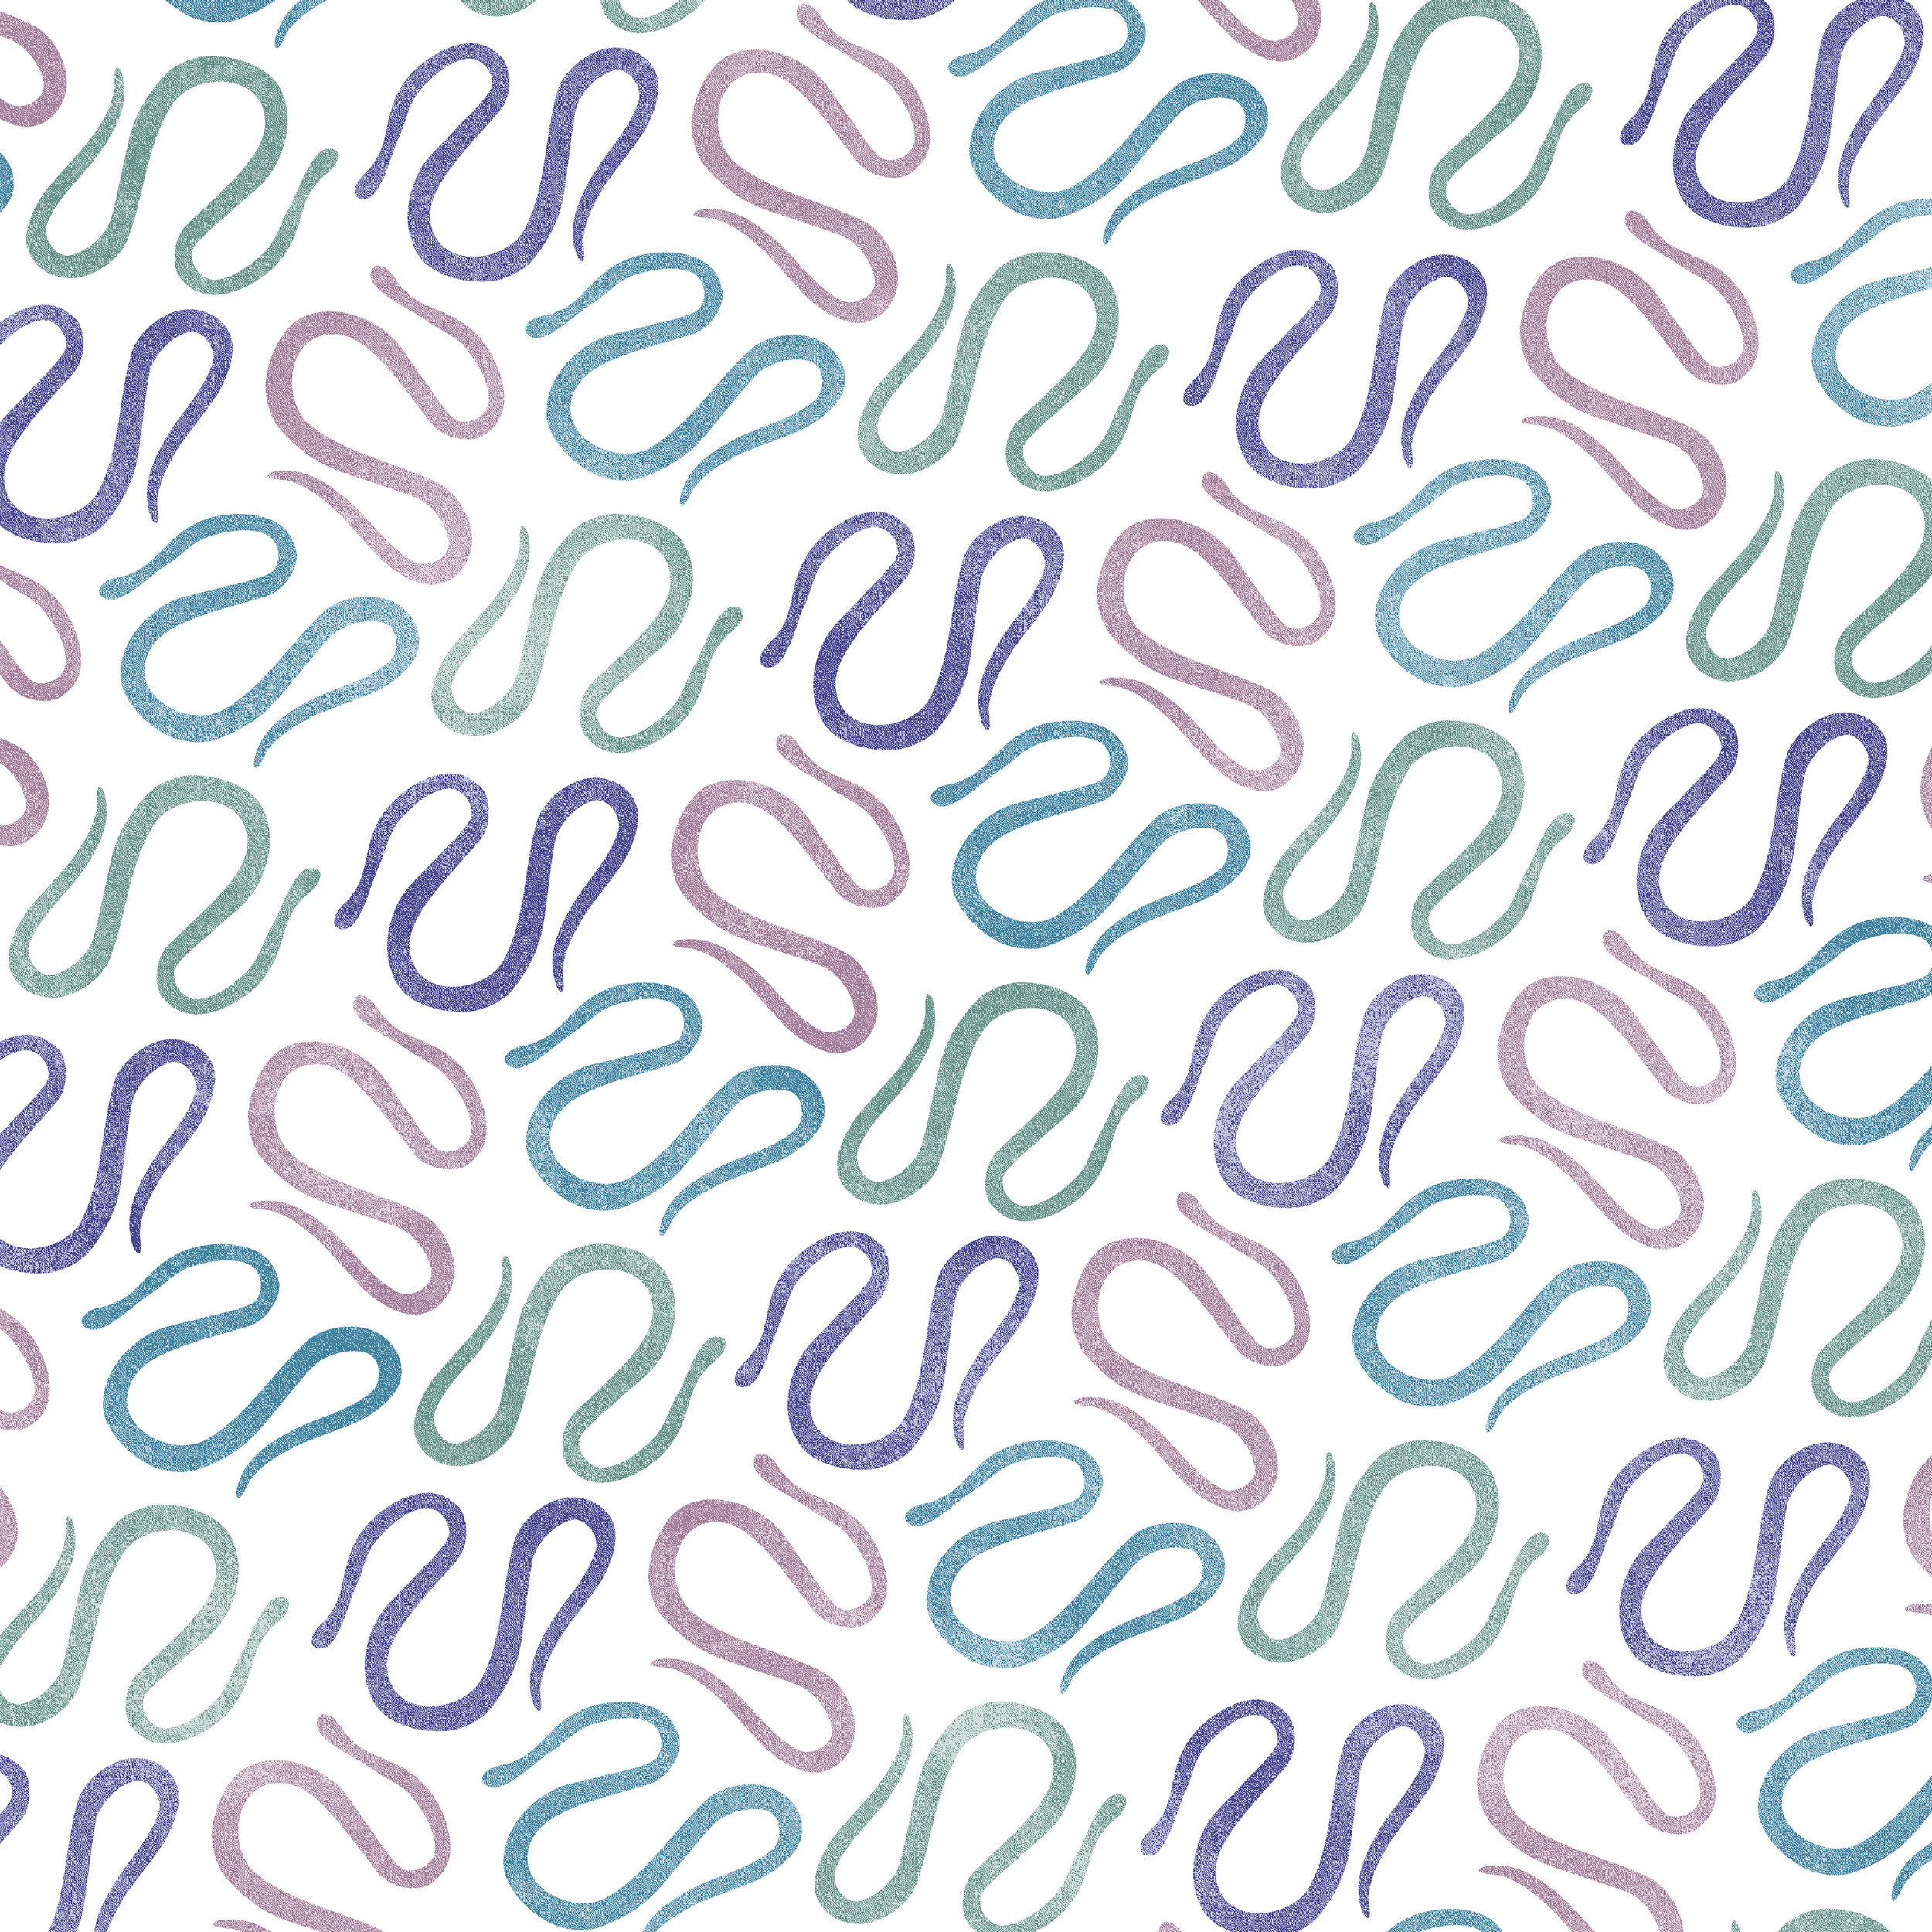 snakes_pattern-01.jpg